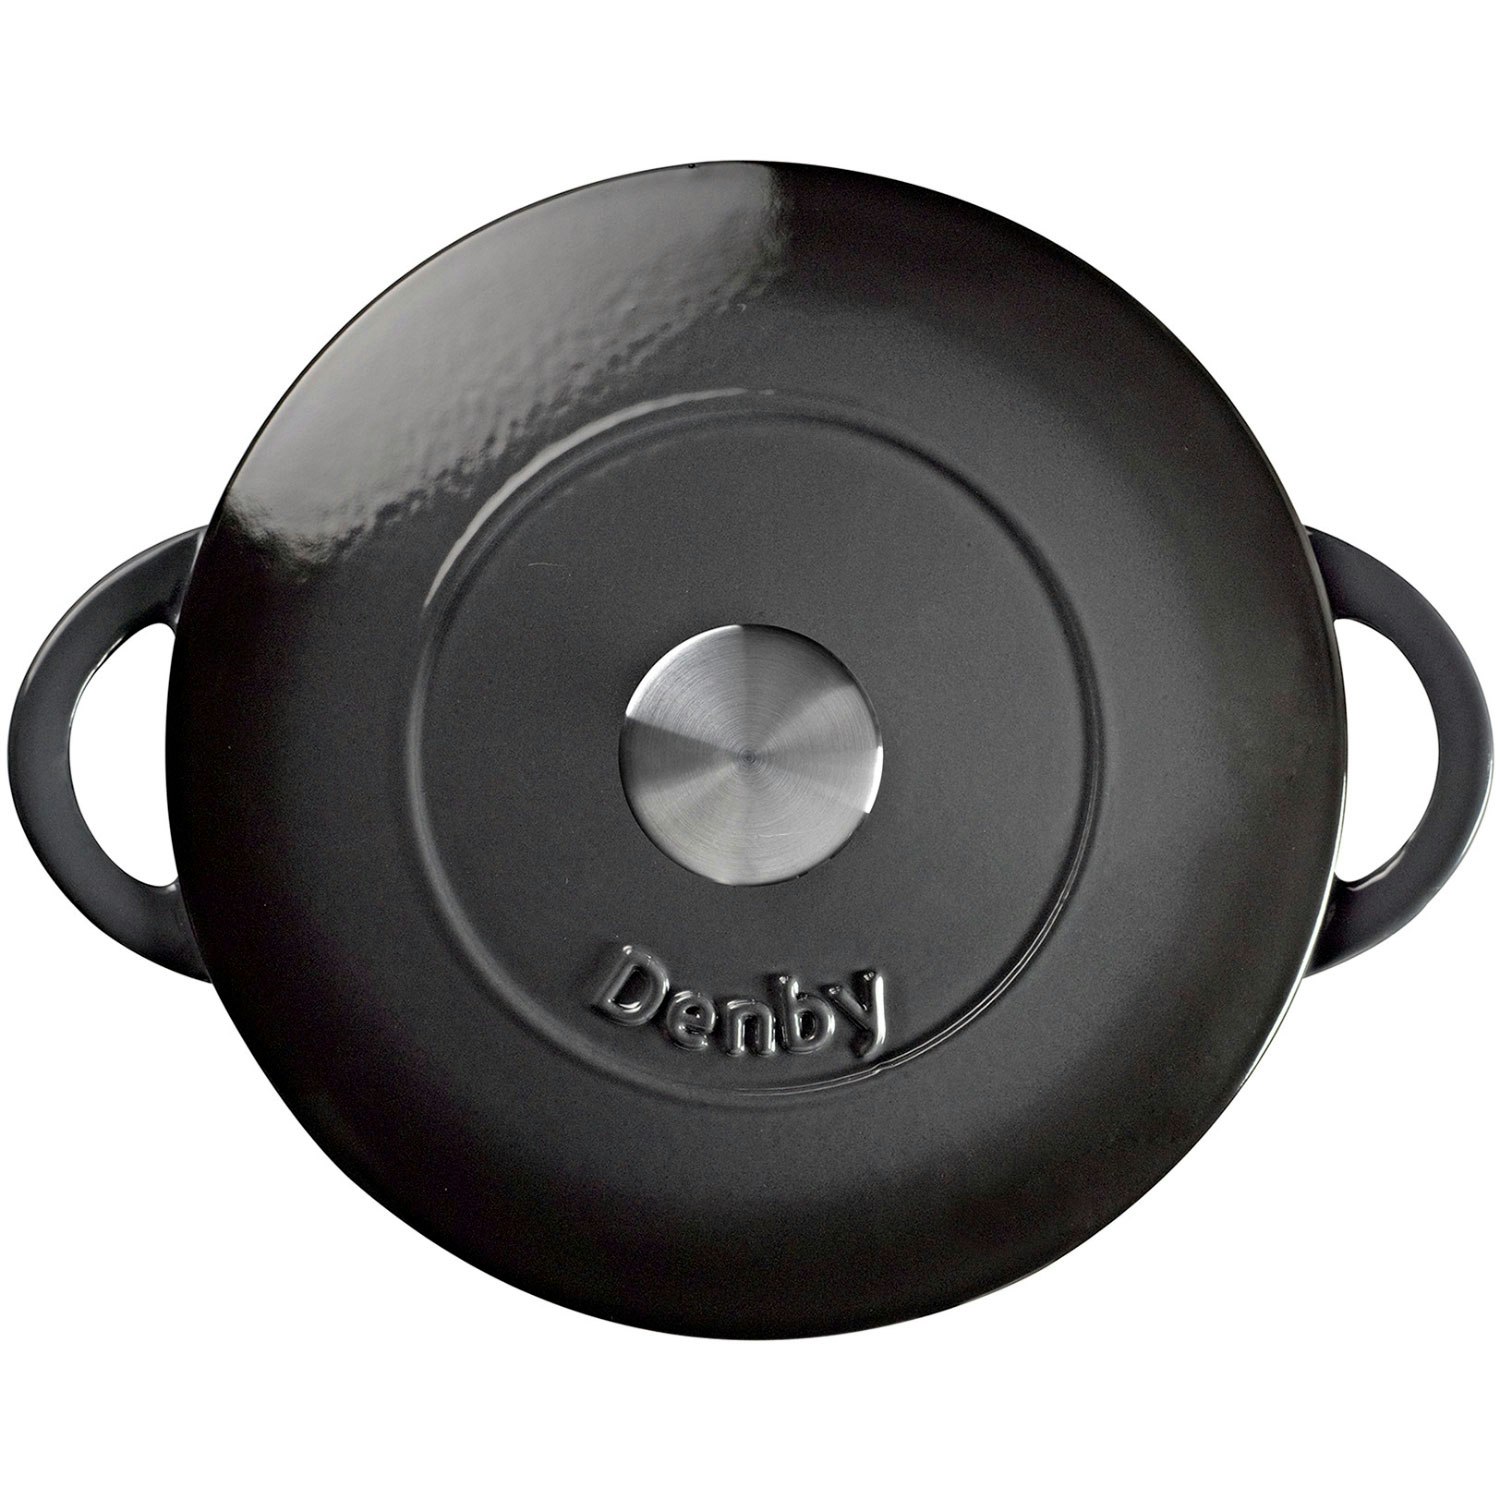 https://royaldesign.com/image/2/denby-cast-iron-round-casserole-24-cm-8